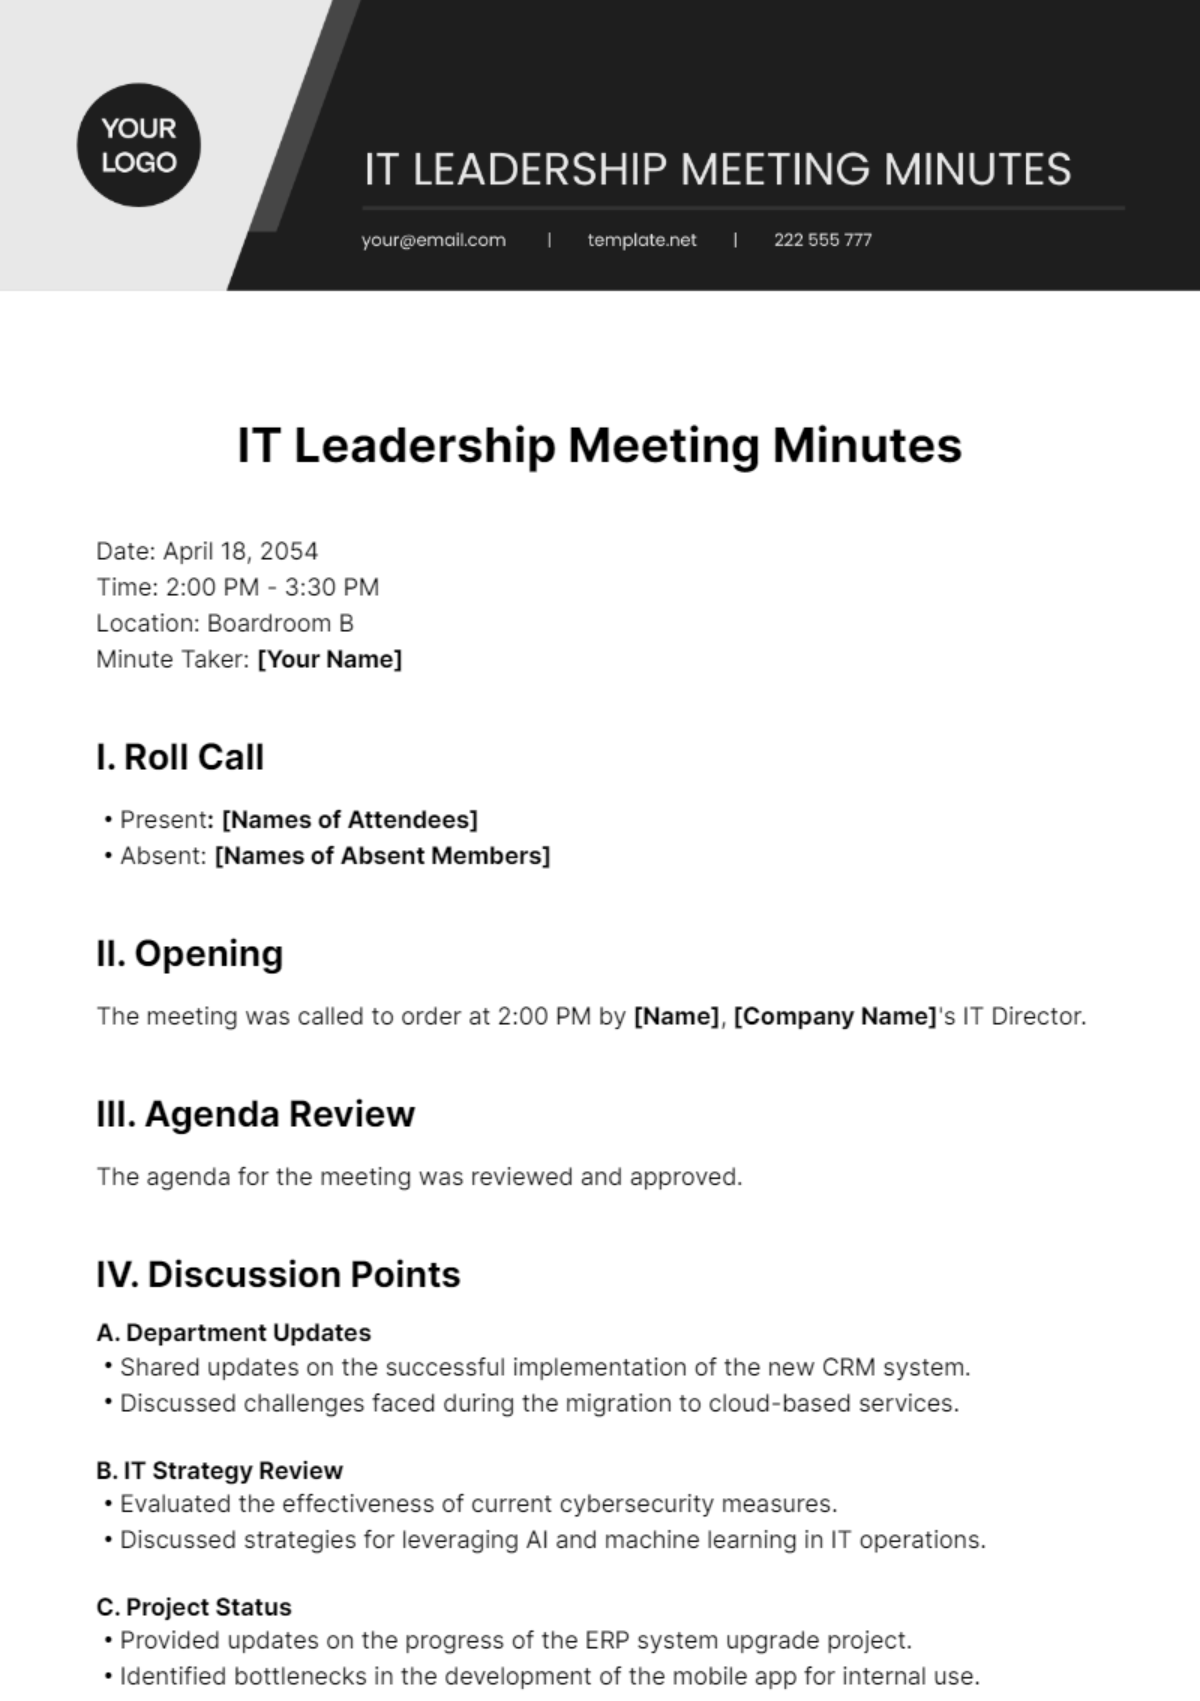 IT Leadership Meeting Minutes Template